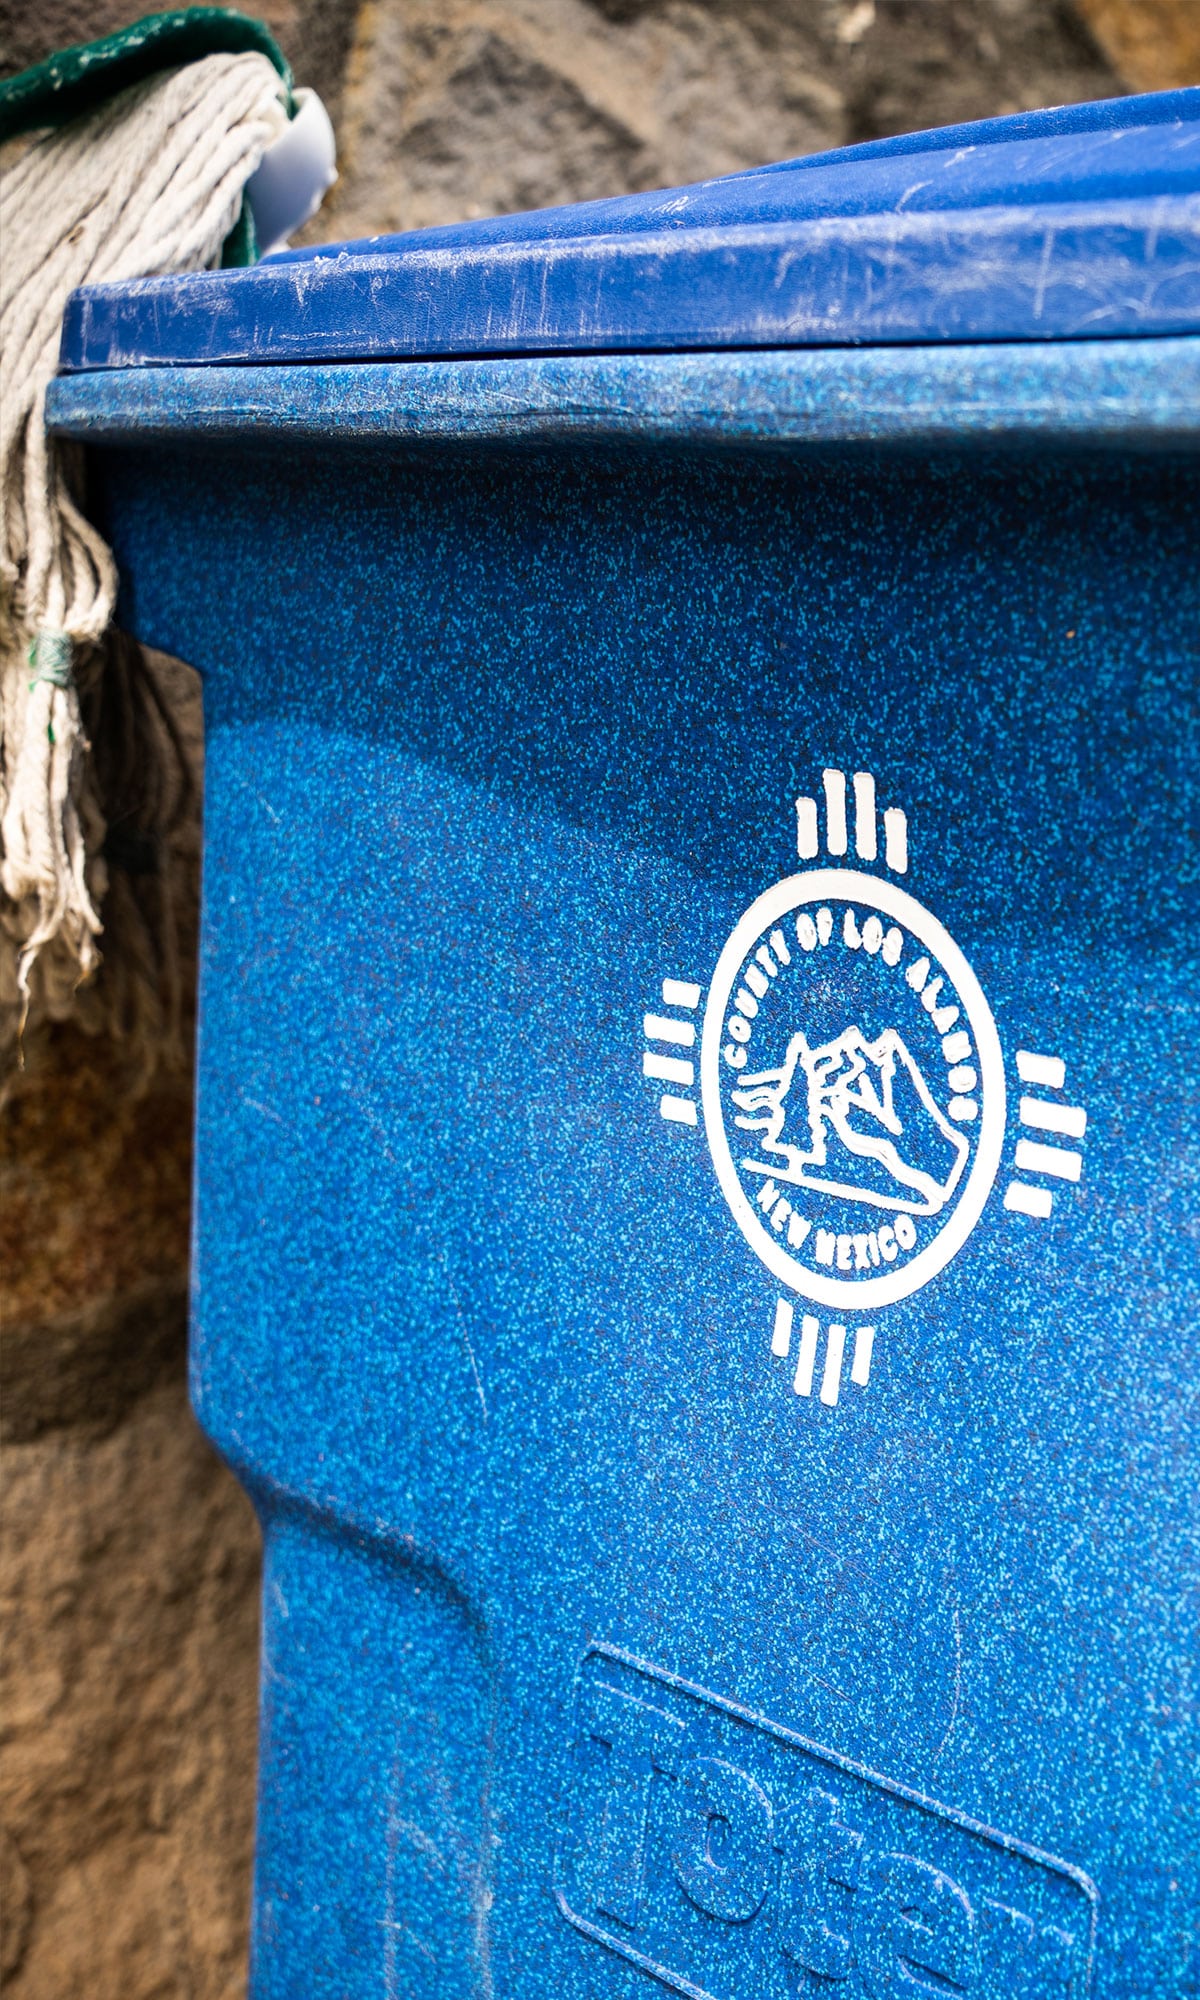 Blue Los Alamos County recycling bin